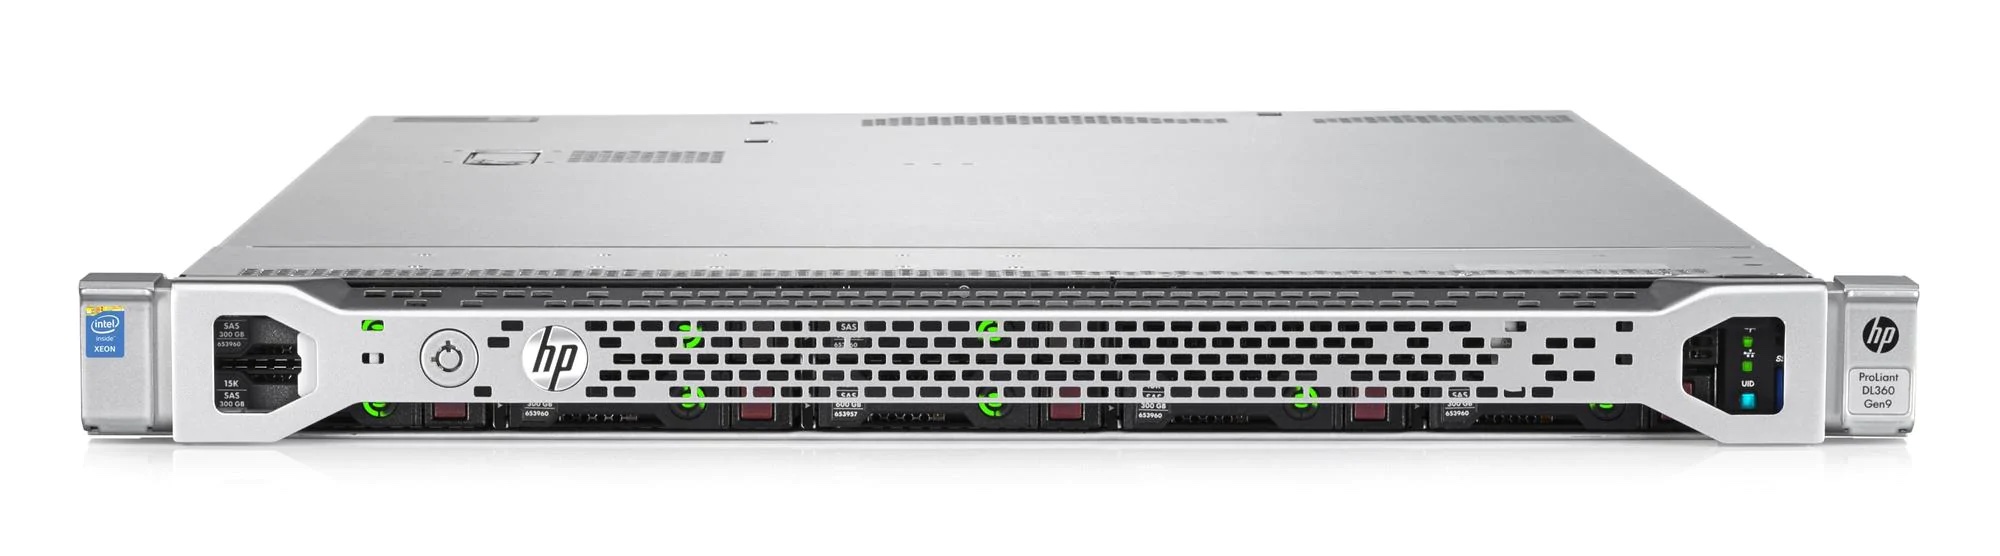 HPE ProLiant DL360 Gen9 Server great price from NewServerLife